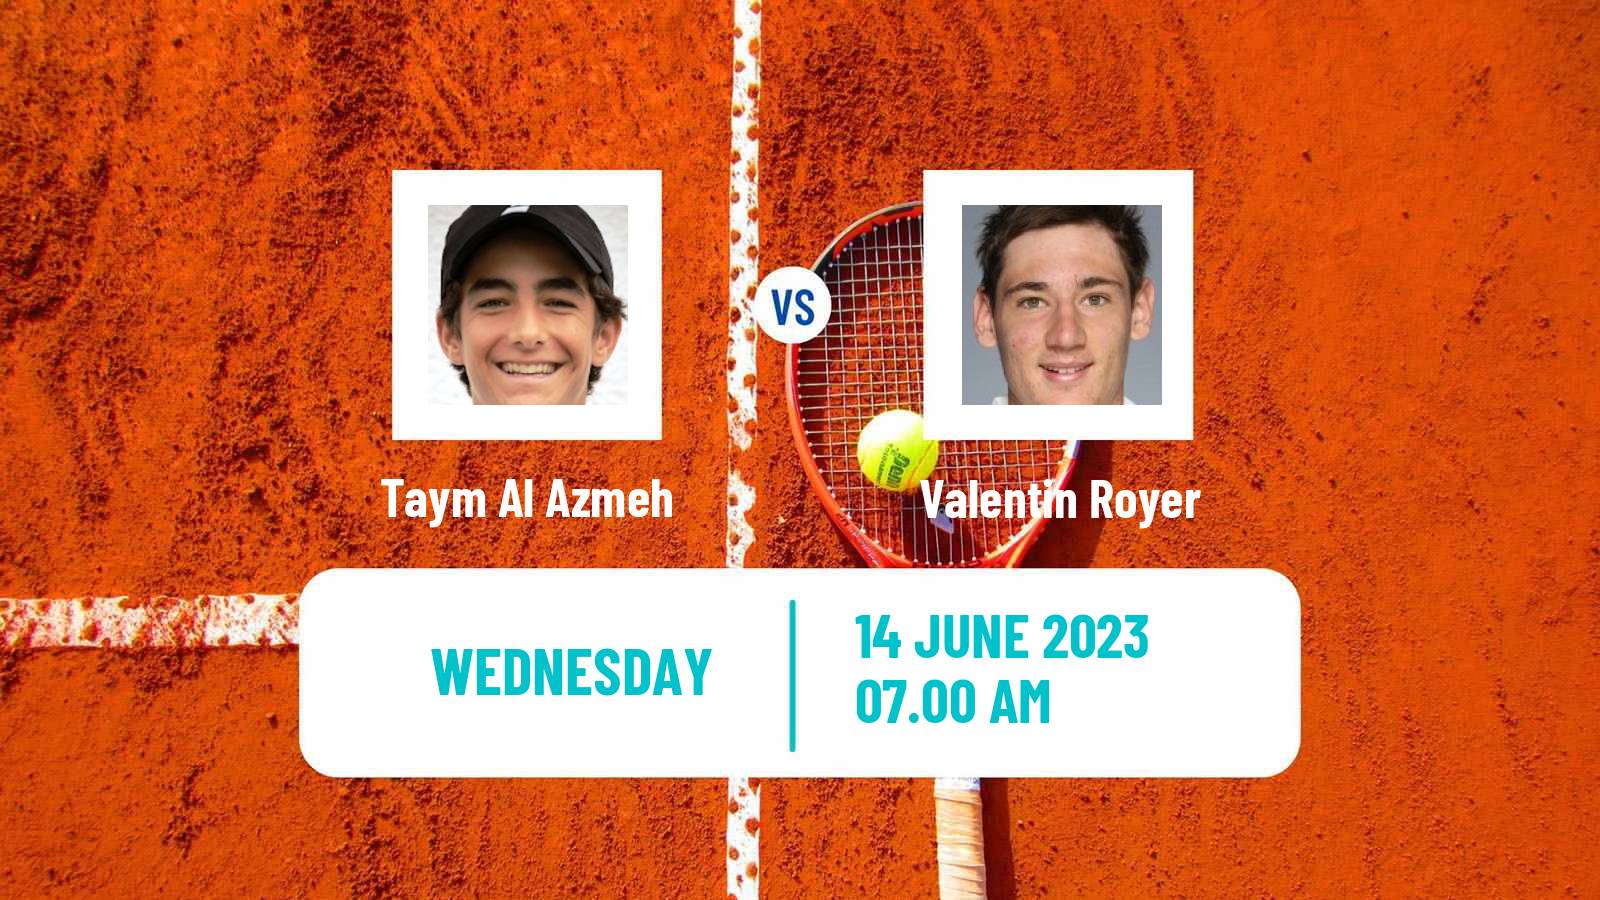 Tennis ITF M15 Rabat Men Taym Al Azmeh - Valentin Royer